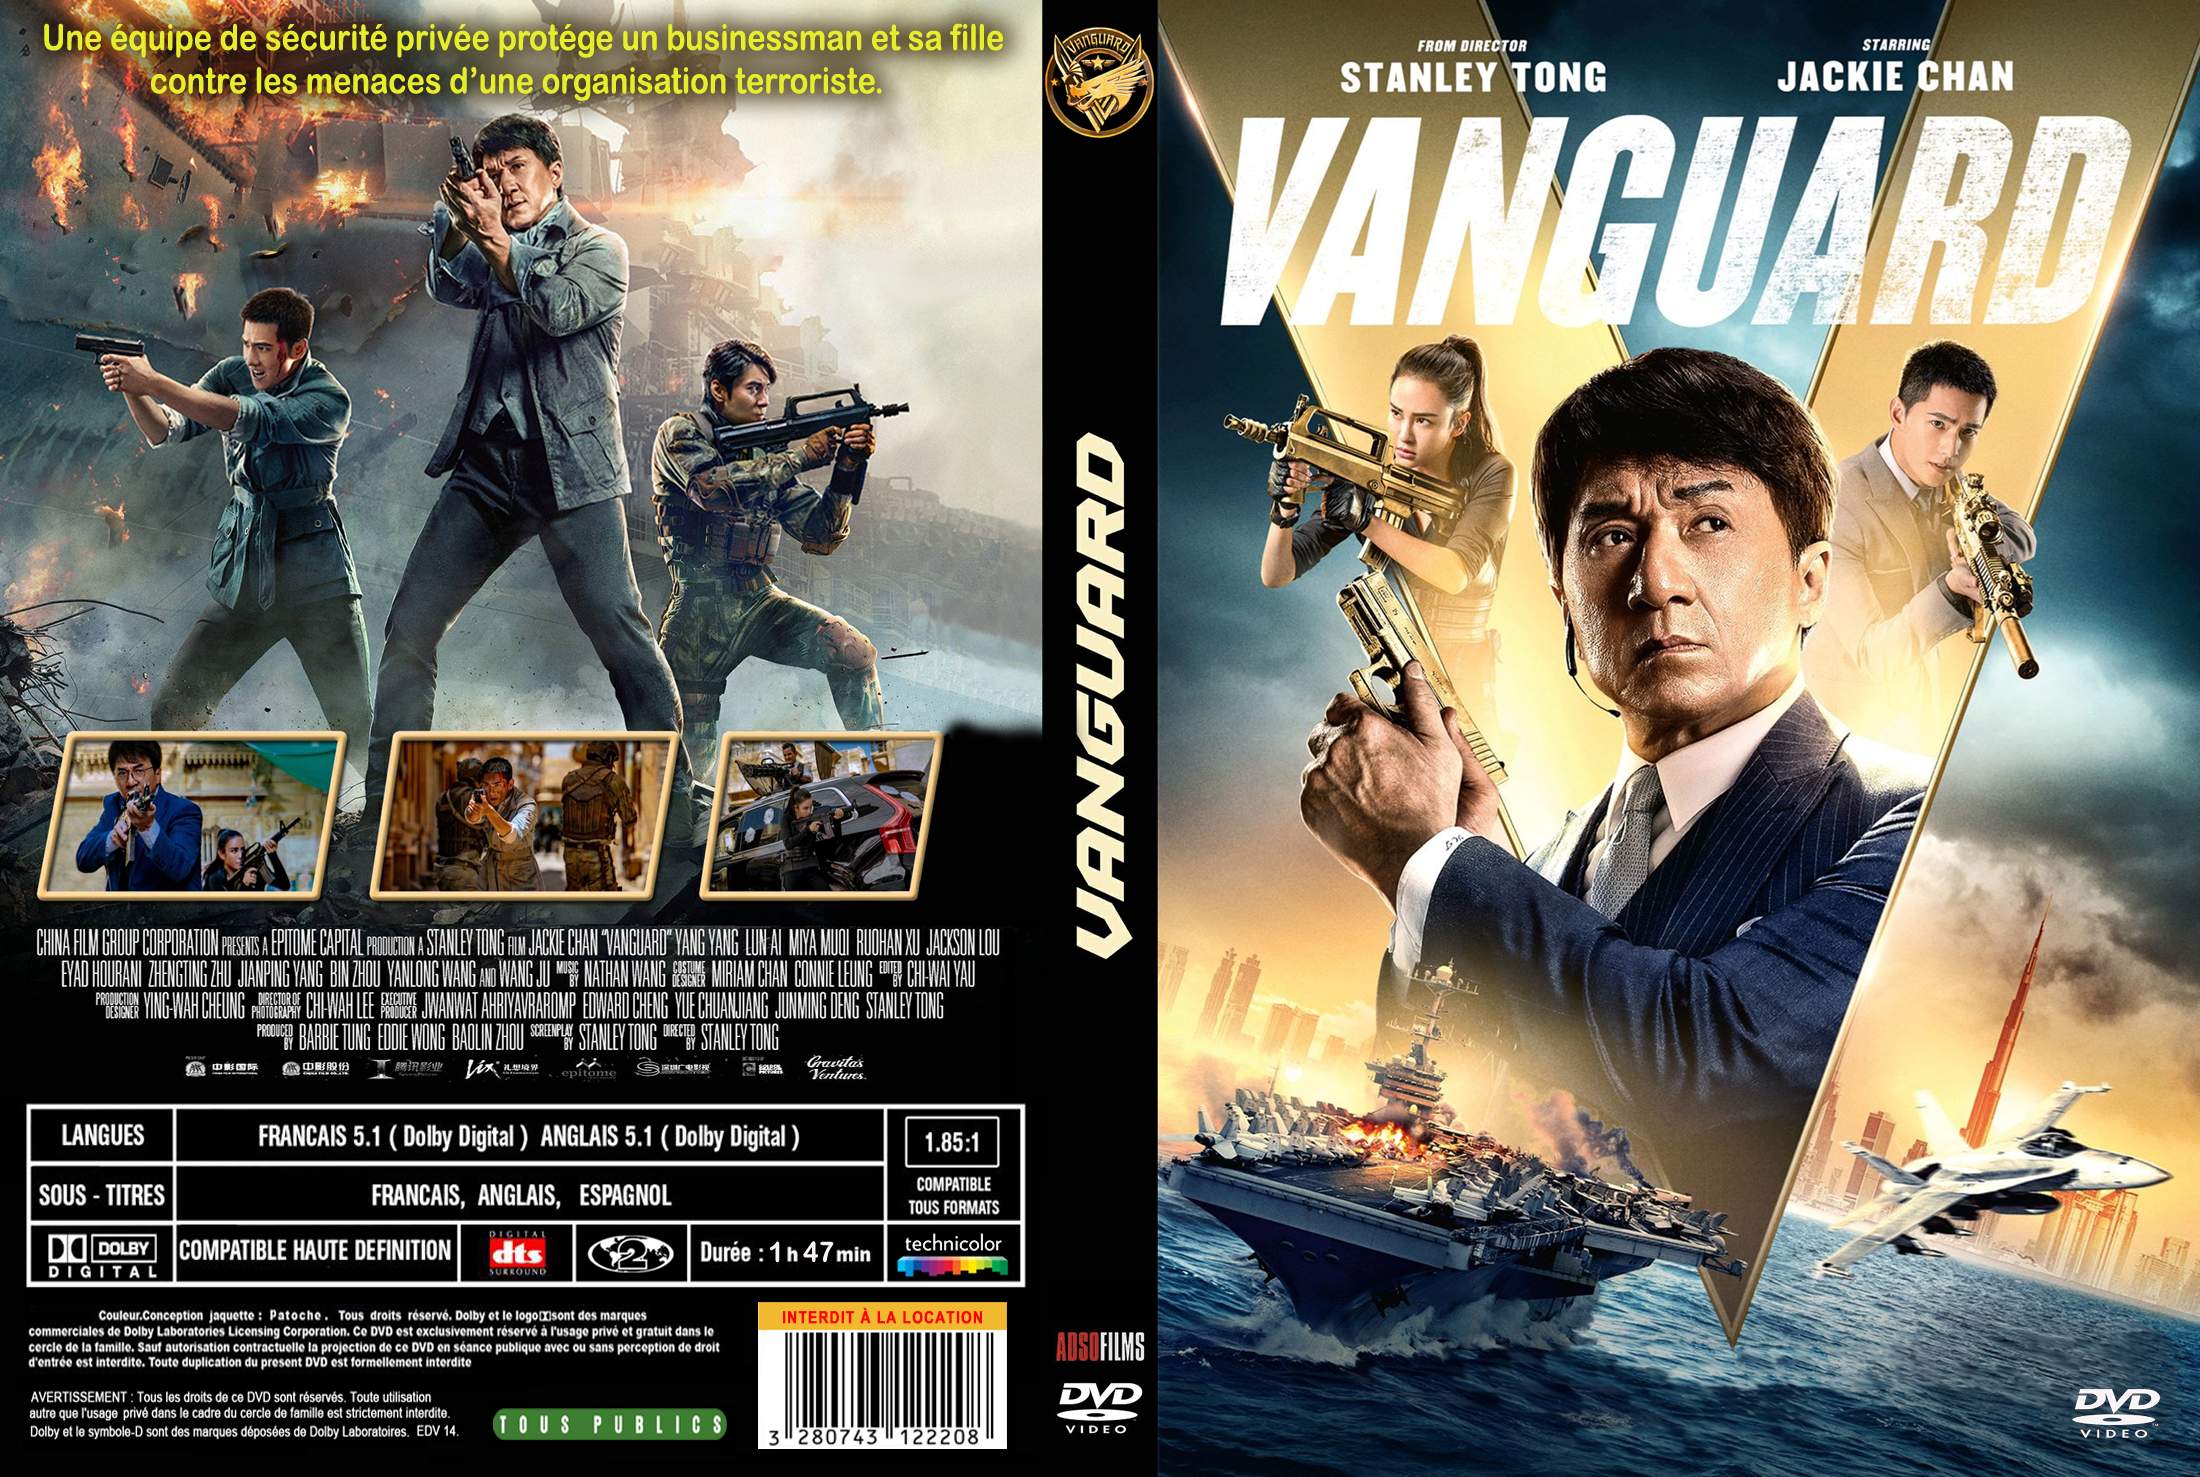 Jaquette DVD Vanguard (2020) custom